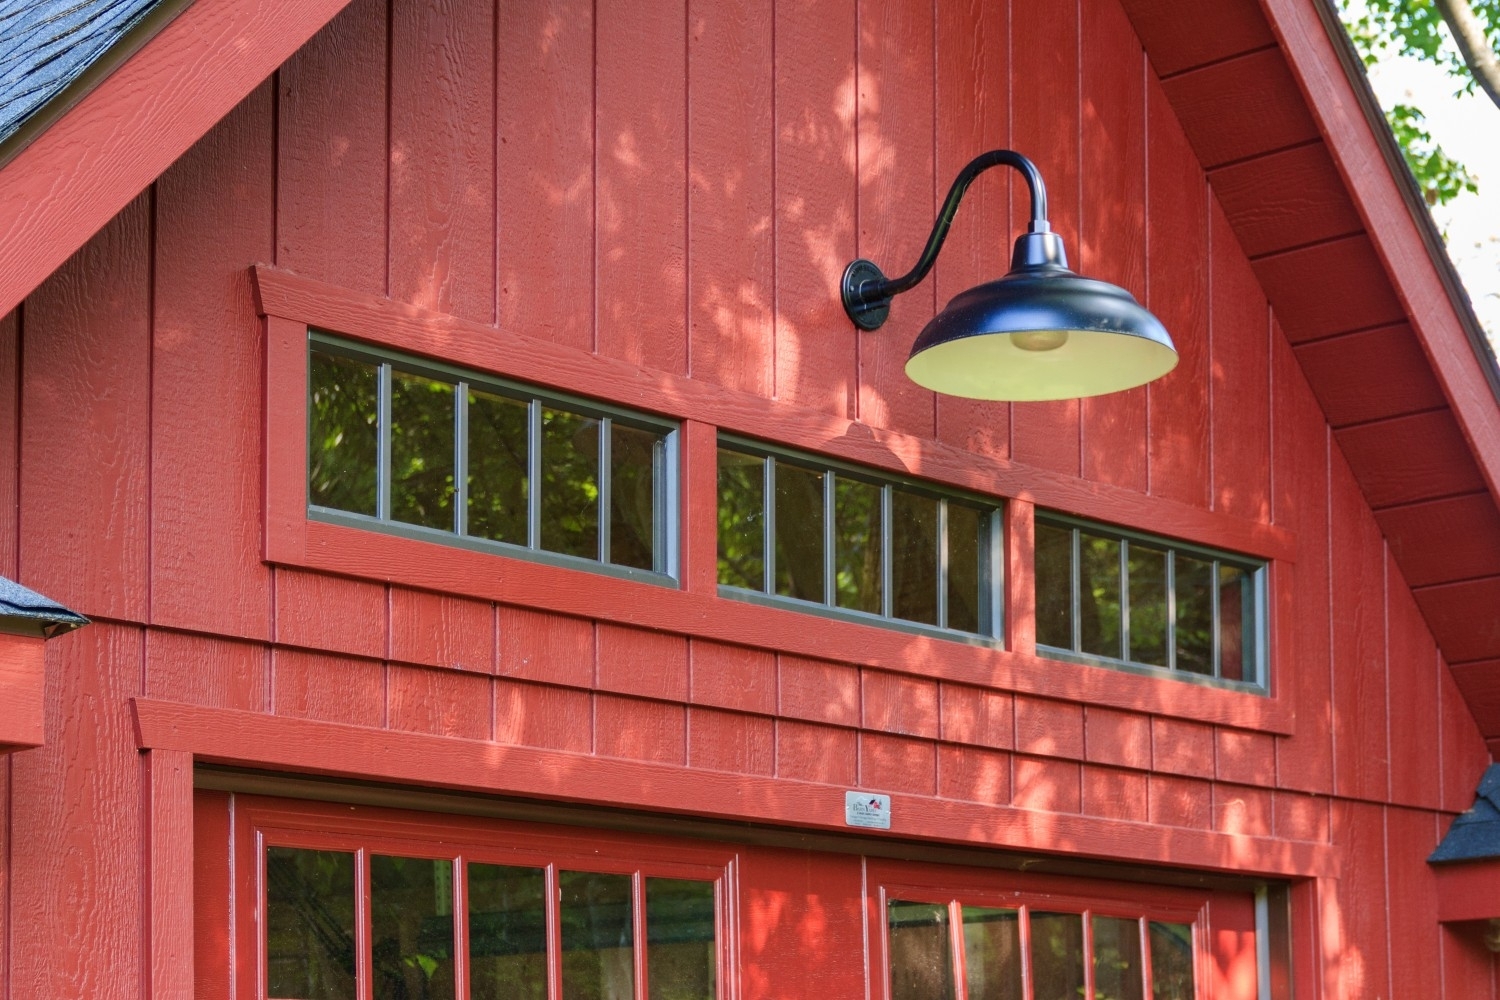 Gooseneck Barn Light Ideas Country Garages